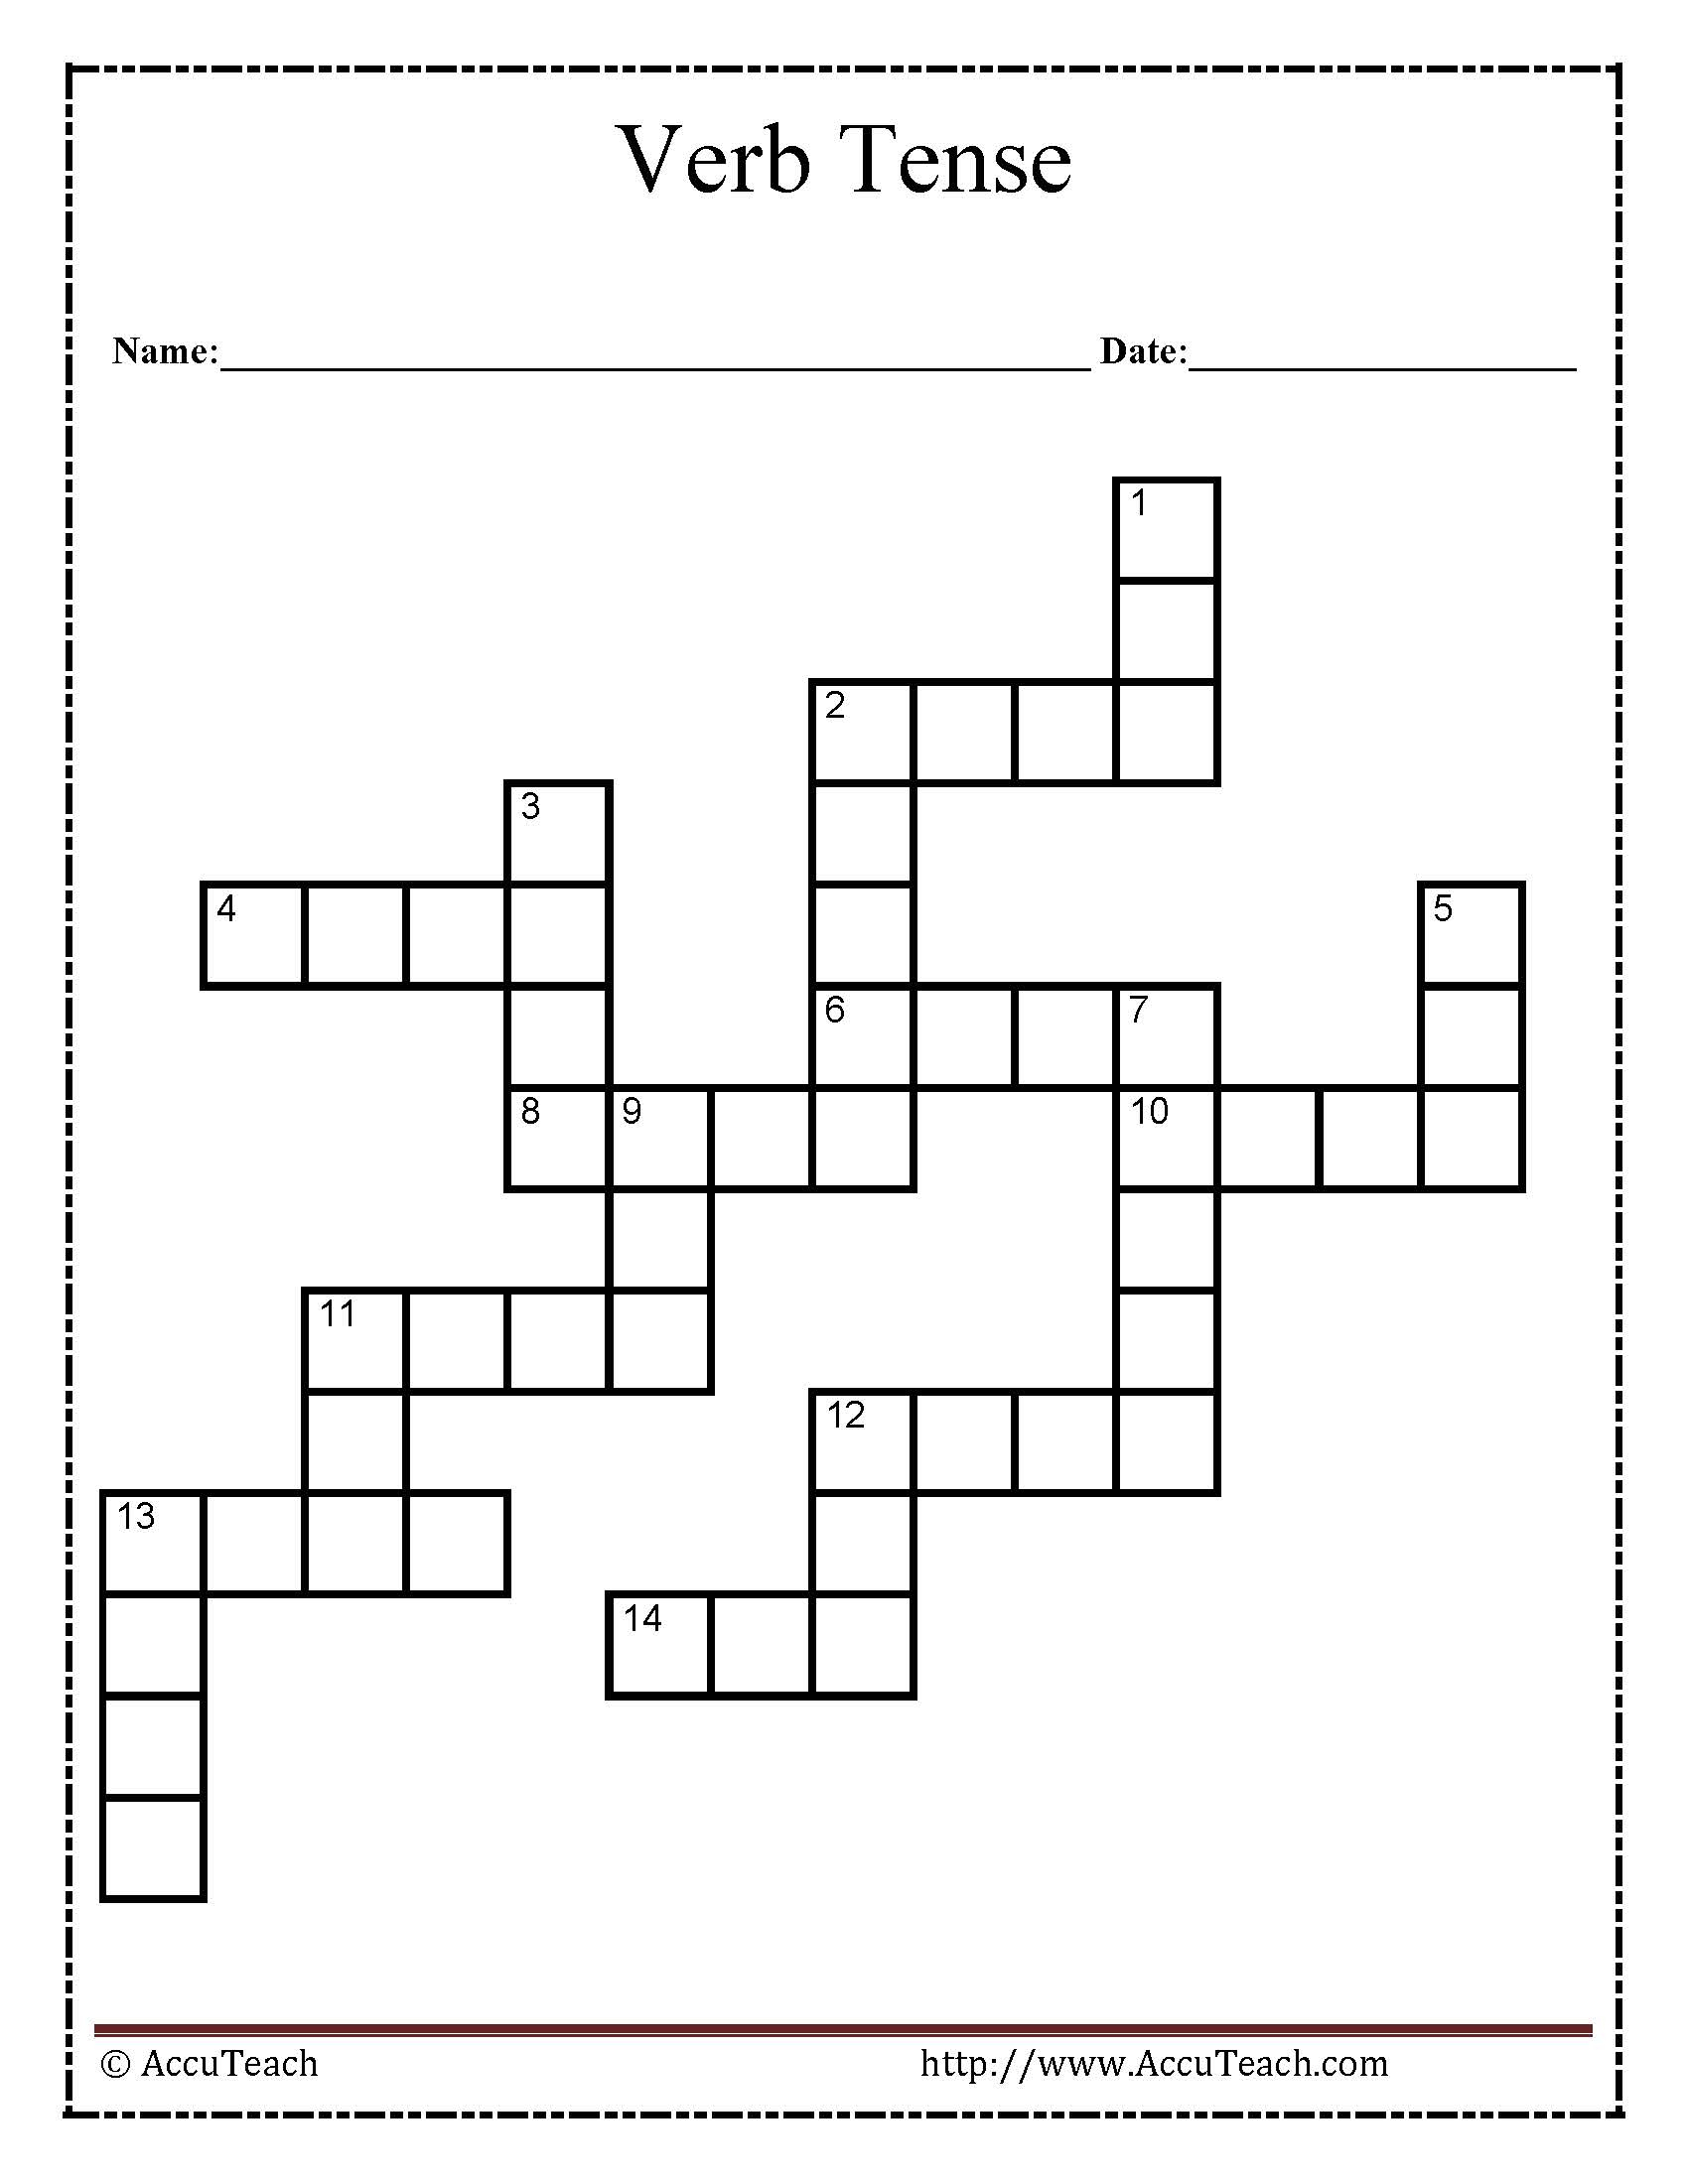 Verb Tense Crossword Puzzle Worksheet - Free Printable Crossword Puzzles For Grade 1